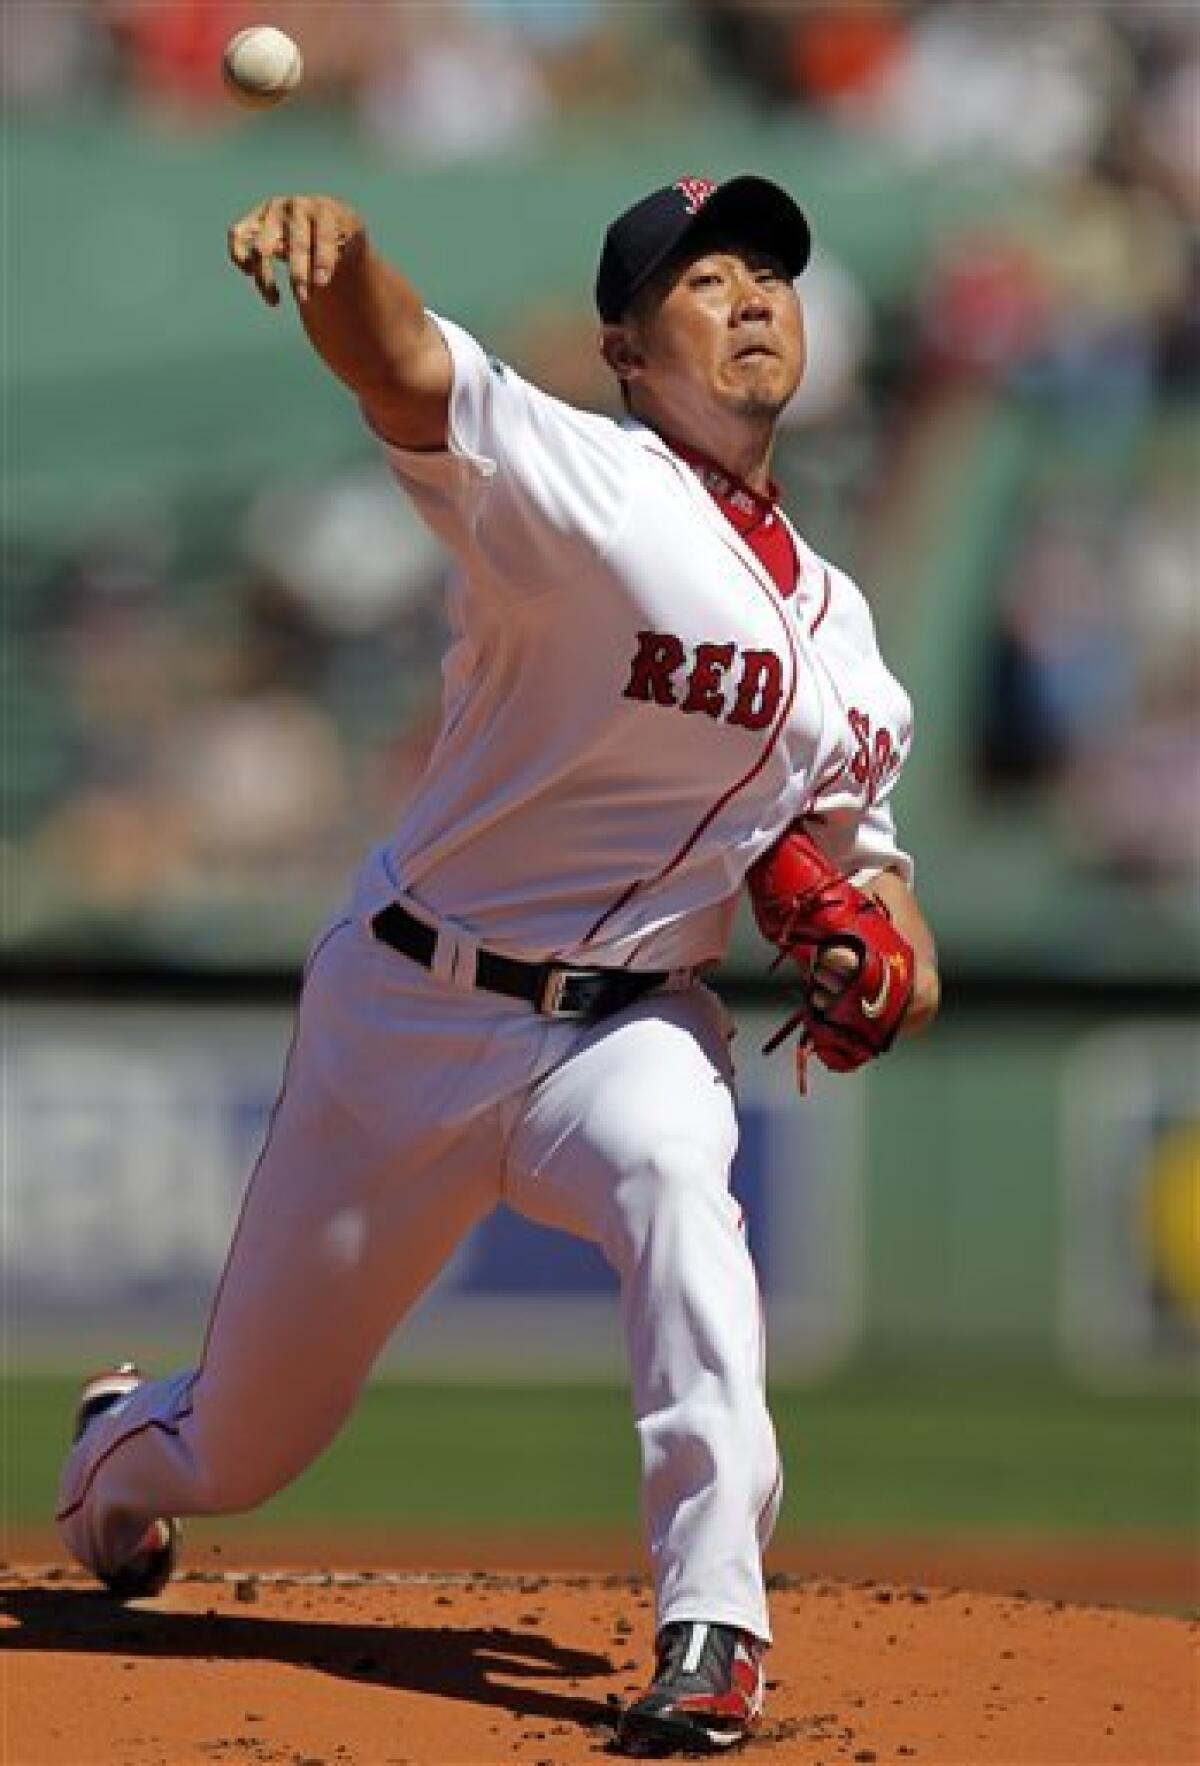 Daisuke Matsuzaka back on the DL - The Boston Globe